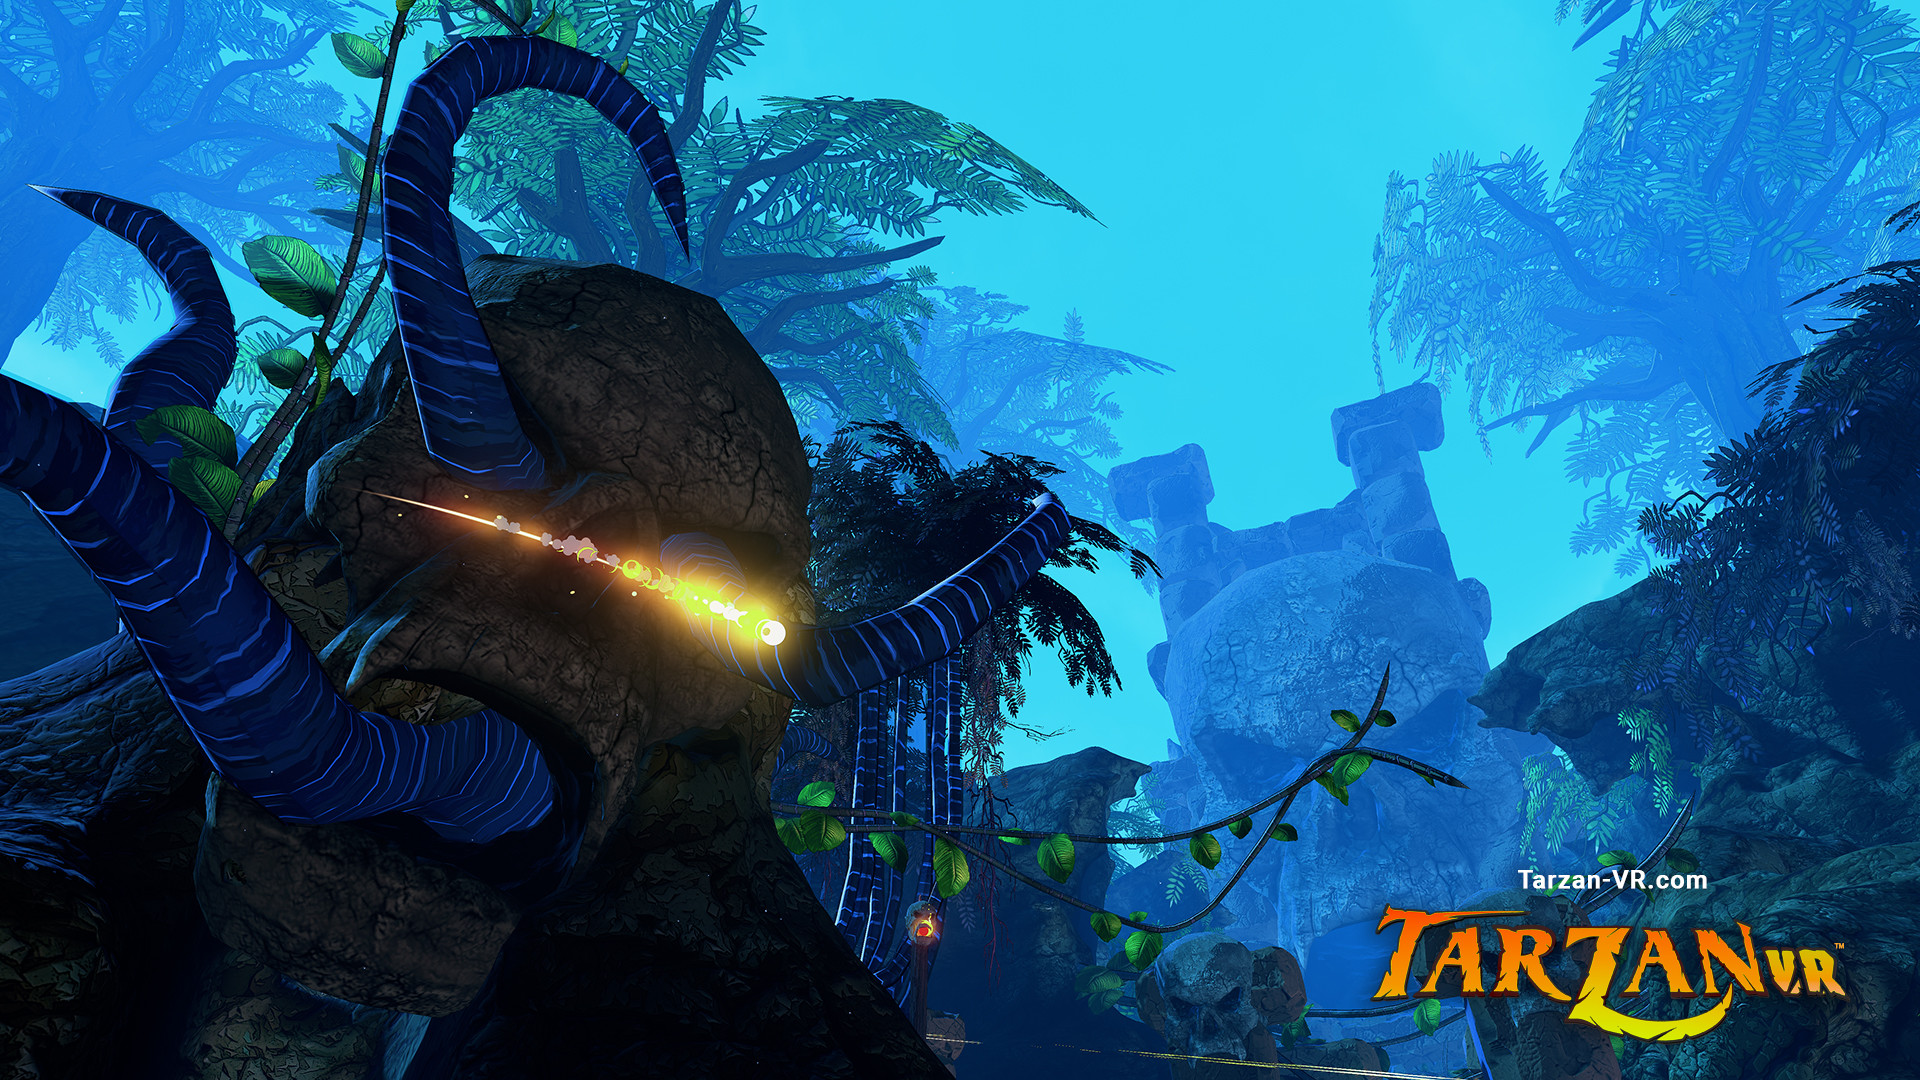 Tarzan VR™ The Trilogy Edition on Steam